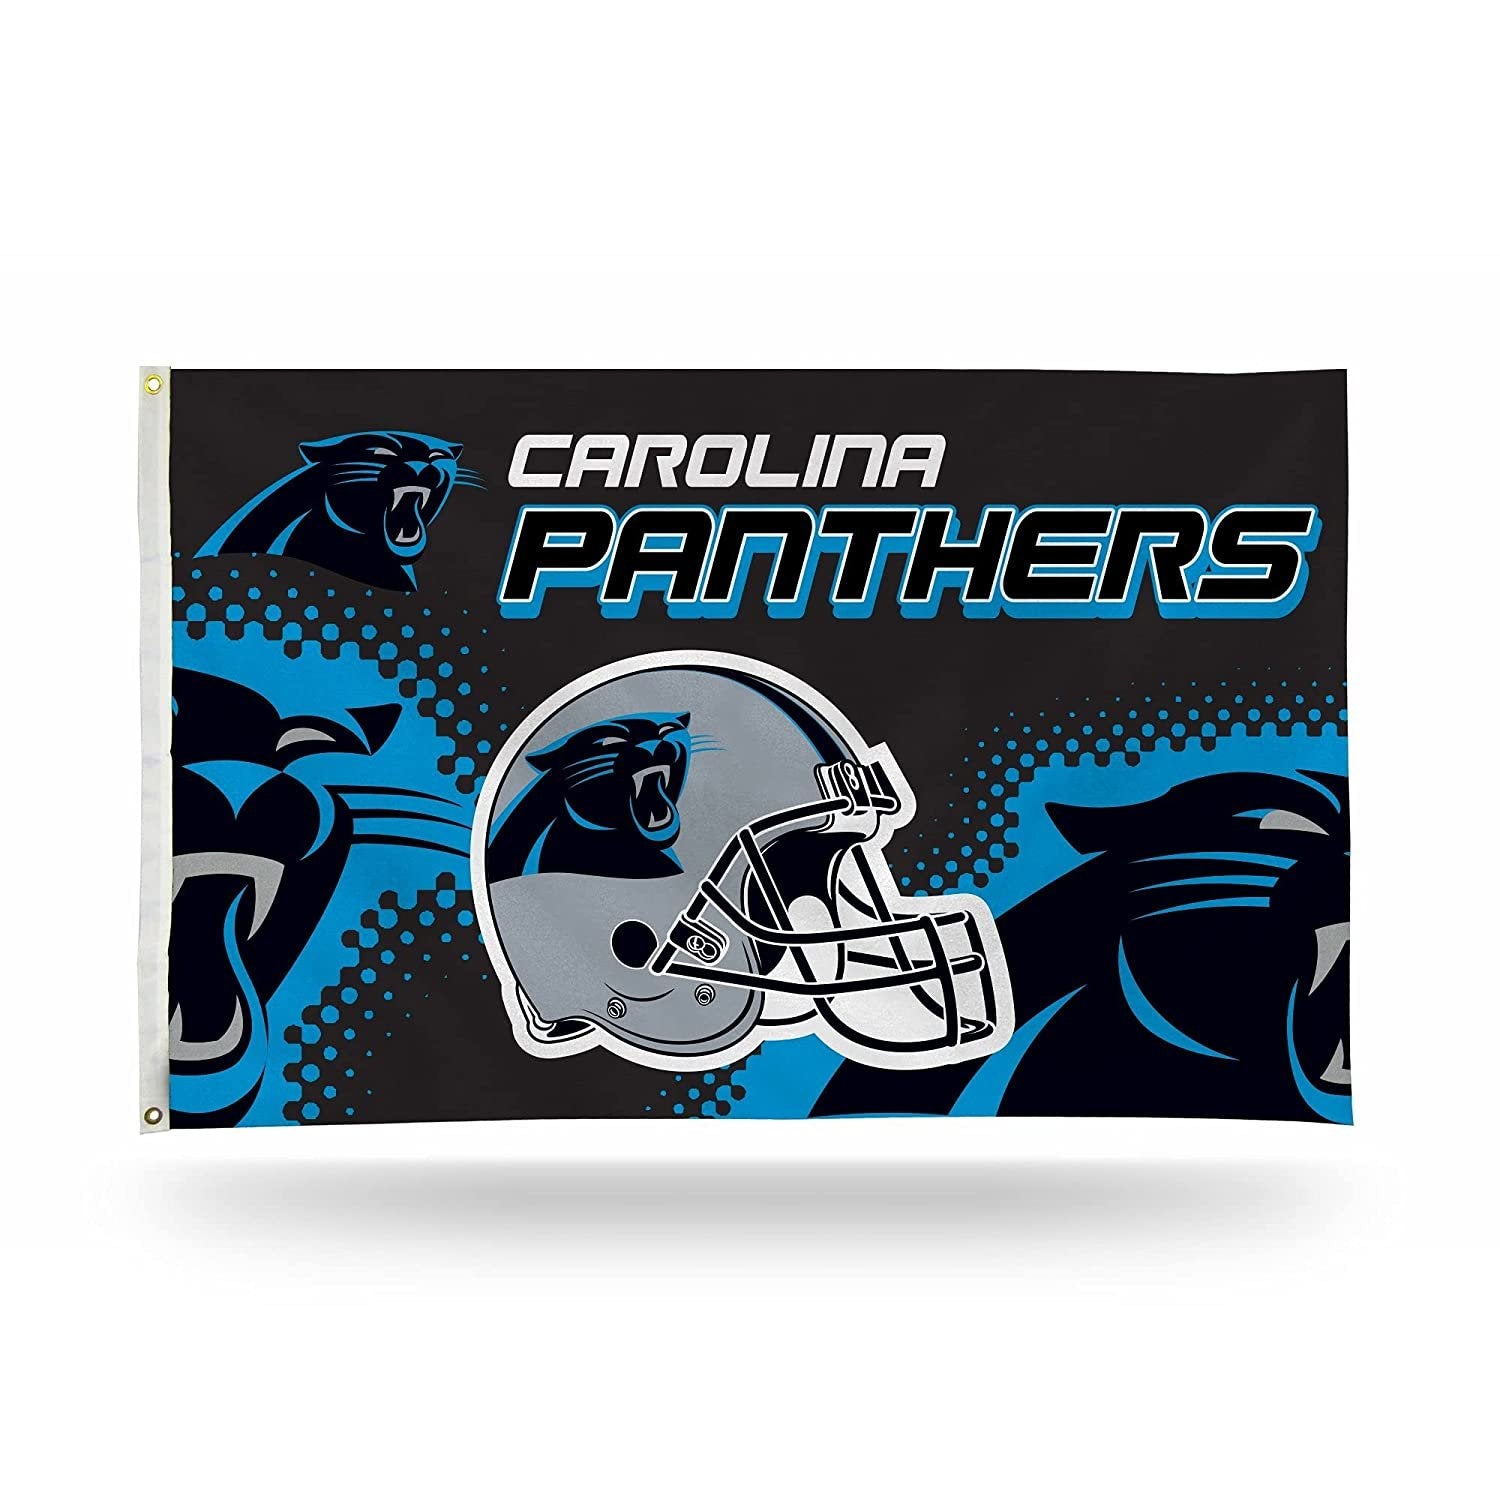 Carolina Panthers Premium 3x5 Feet Flag Banner, Helmet Design, Metal Grommets, Outdoor Use, Single Sided